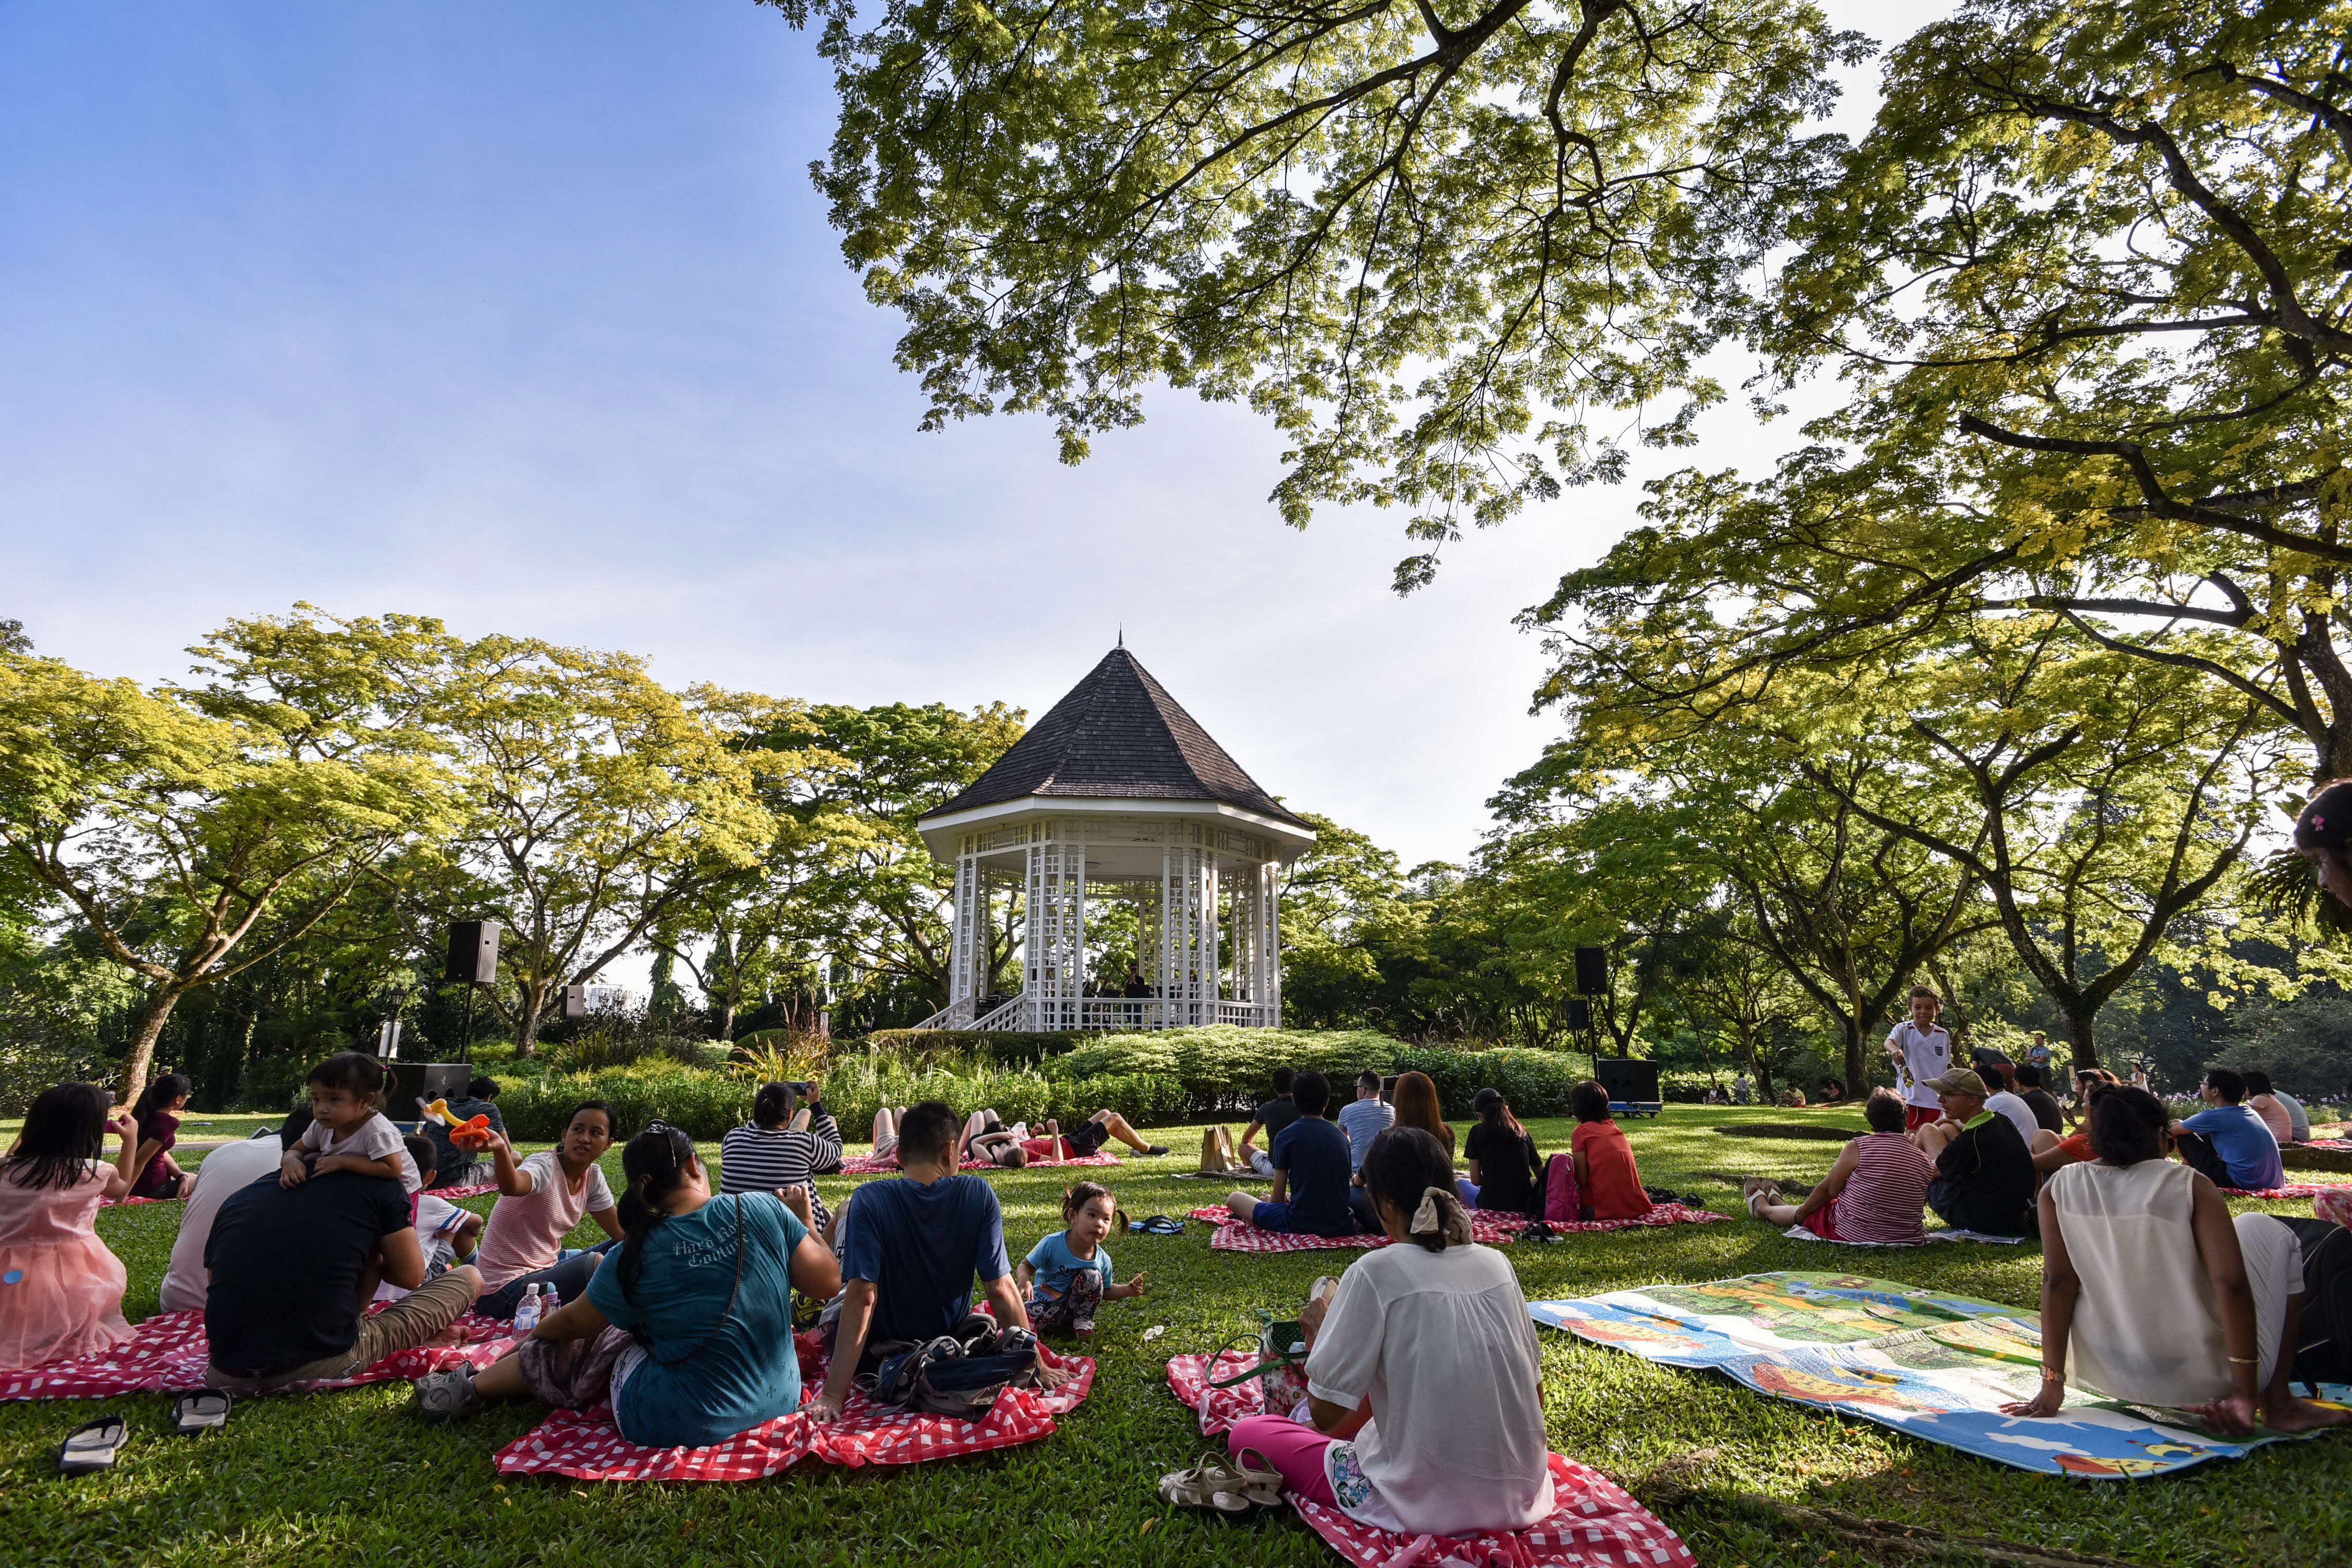 Singapore Botanic Gardens gazebo today, 2017